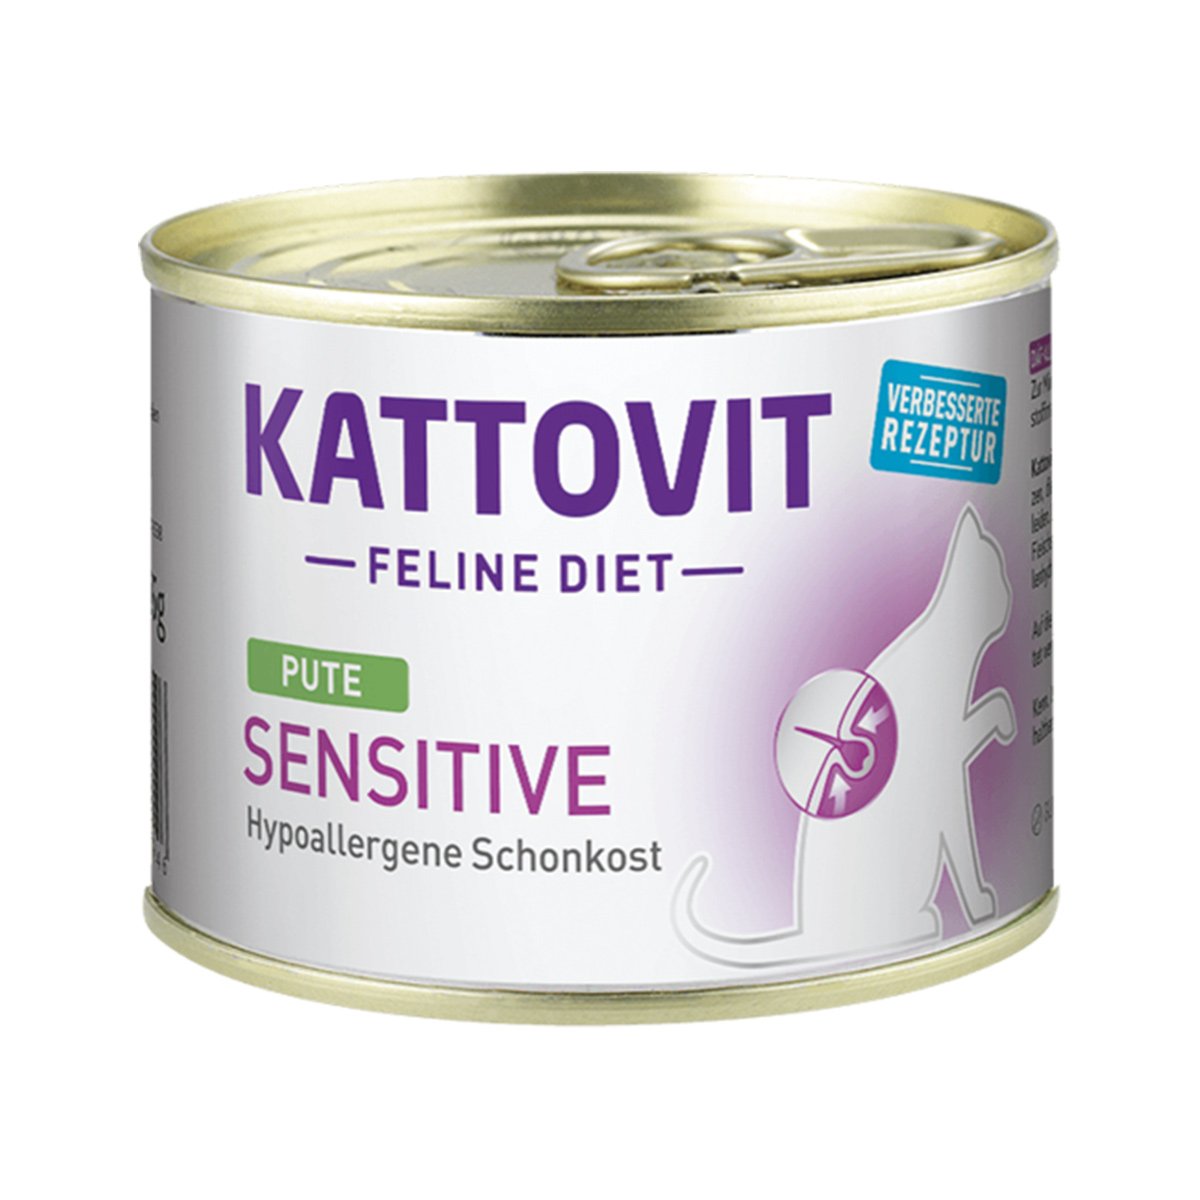 KATTOVIT Feline Diet Sensitive Pute 24x85g von Kattovit